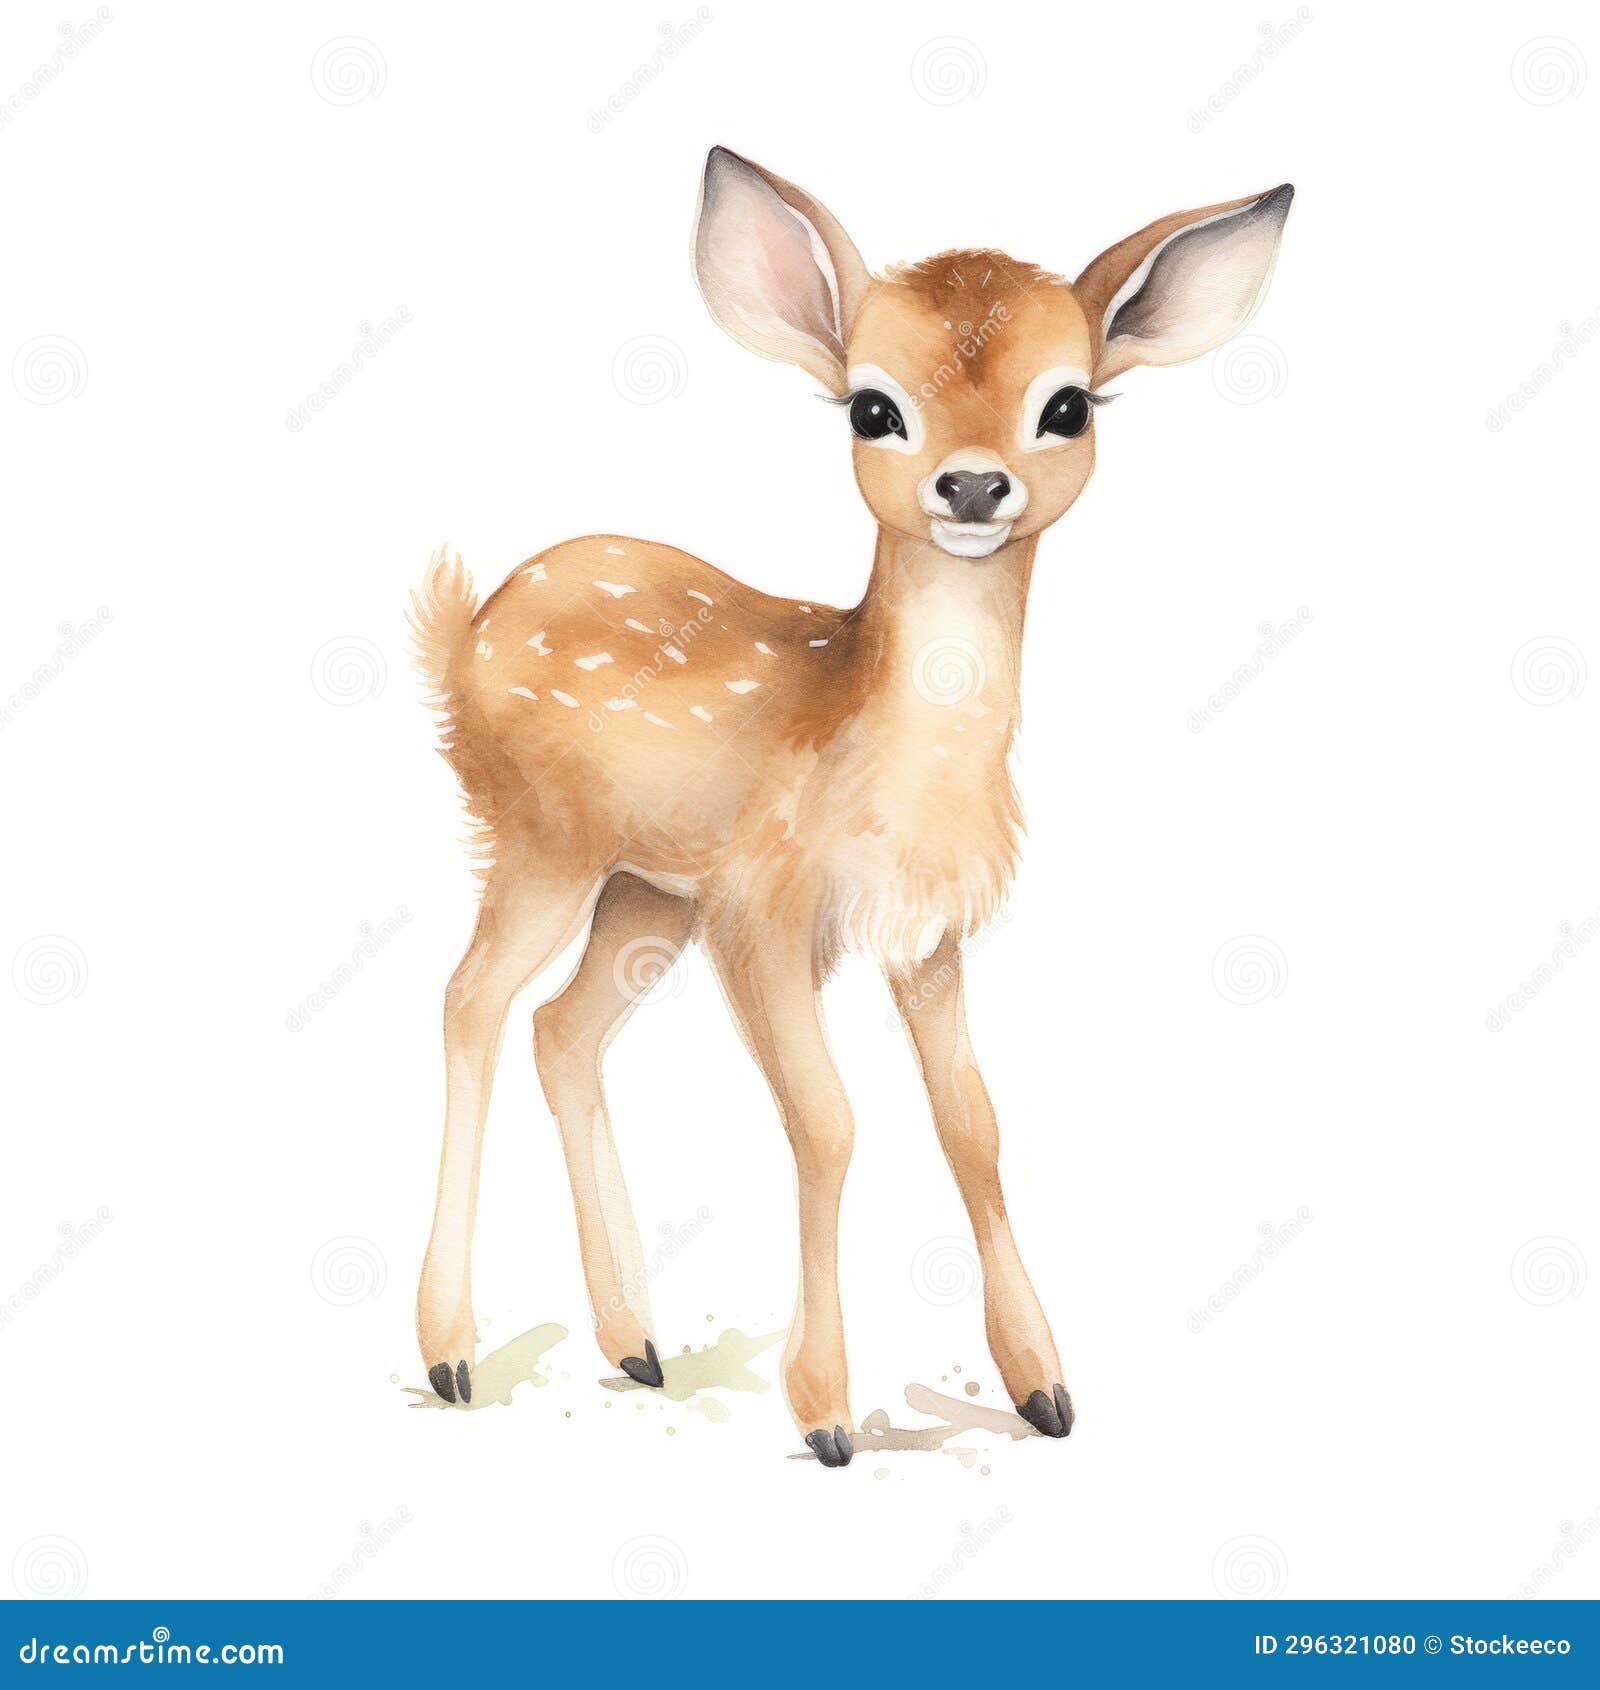 adorable watercolor  of a happy baby deer